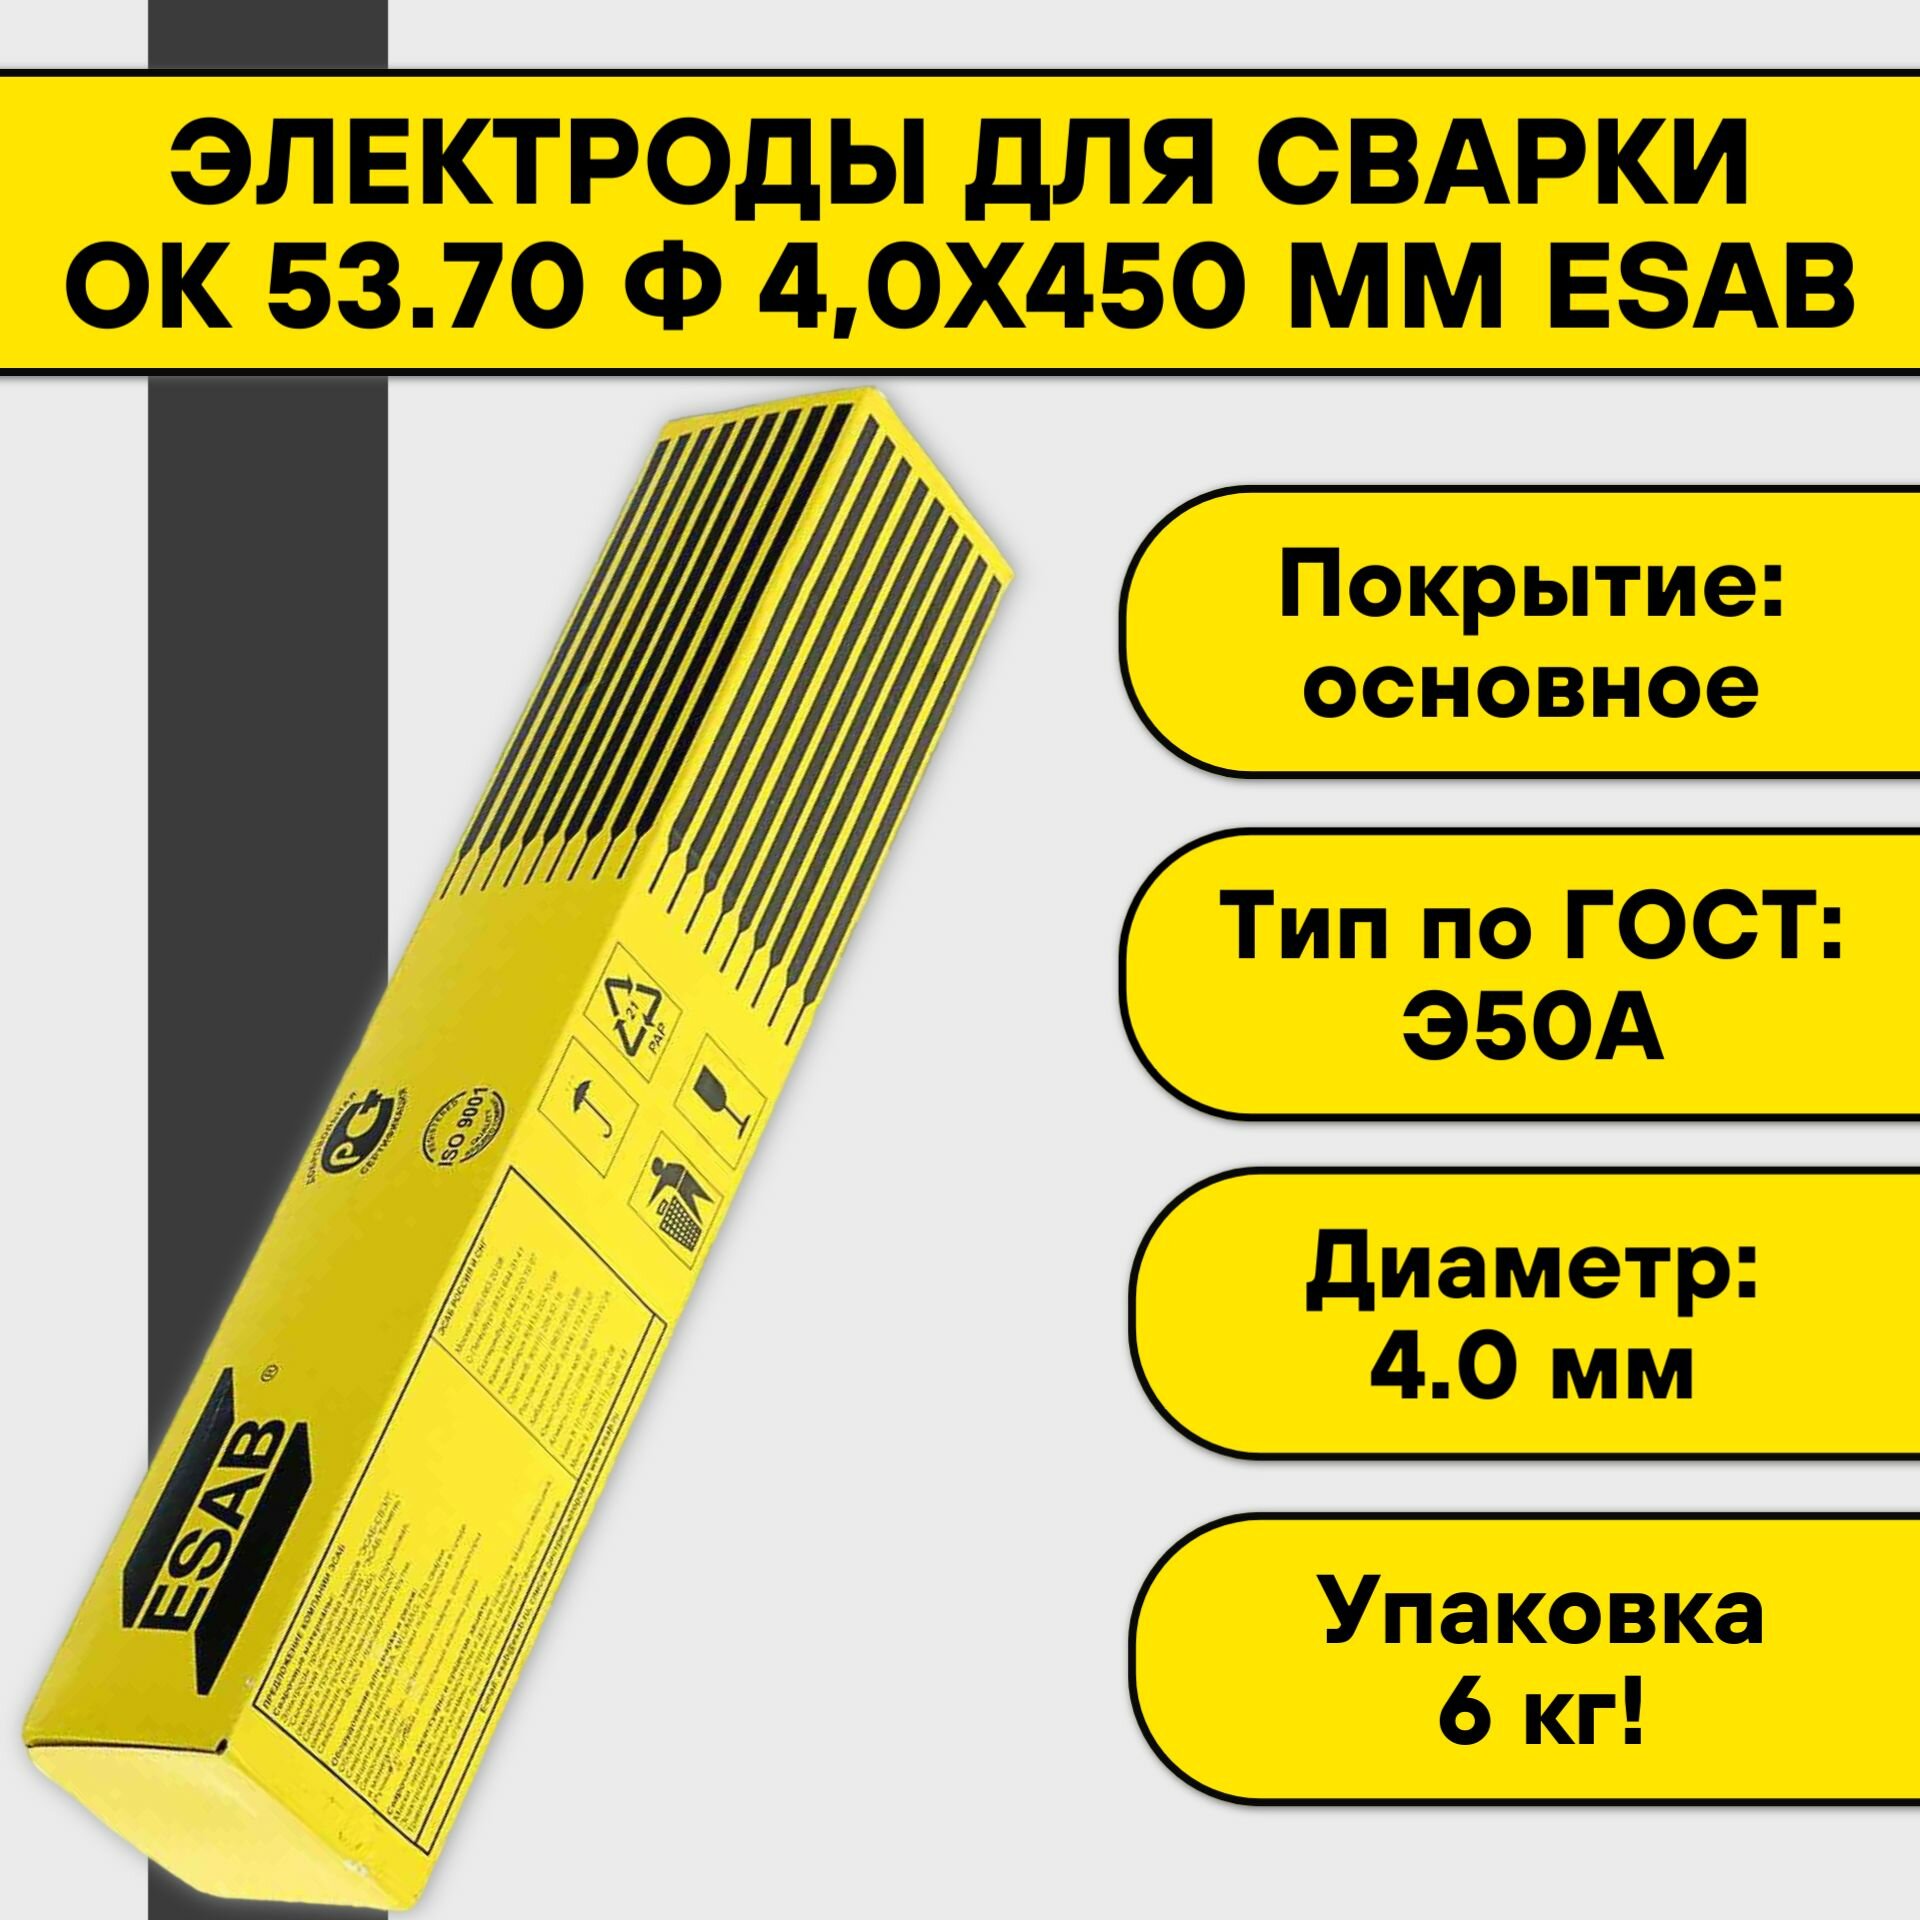 Электроды для сварки ОК 53.70 ф 40х450 мм Esab Швеция (6 кг)